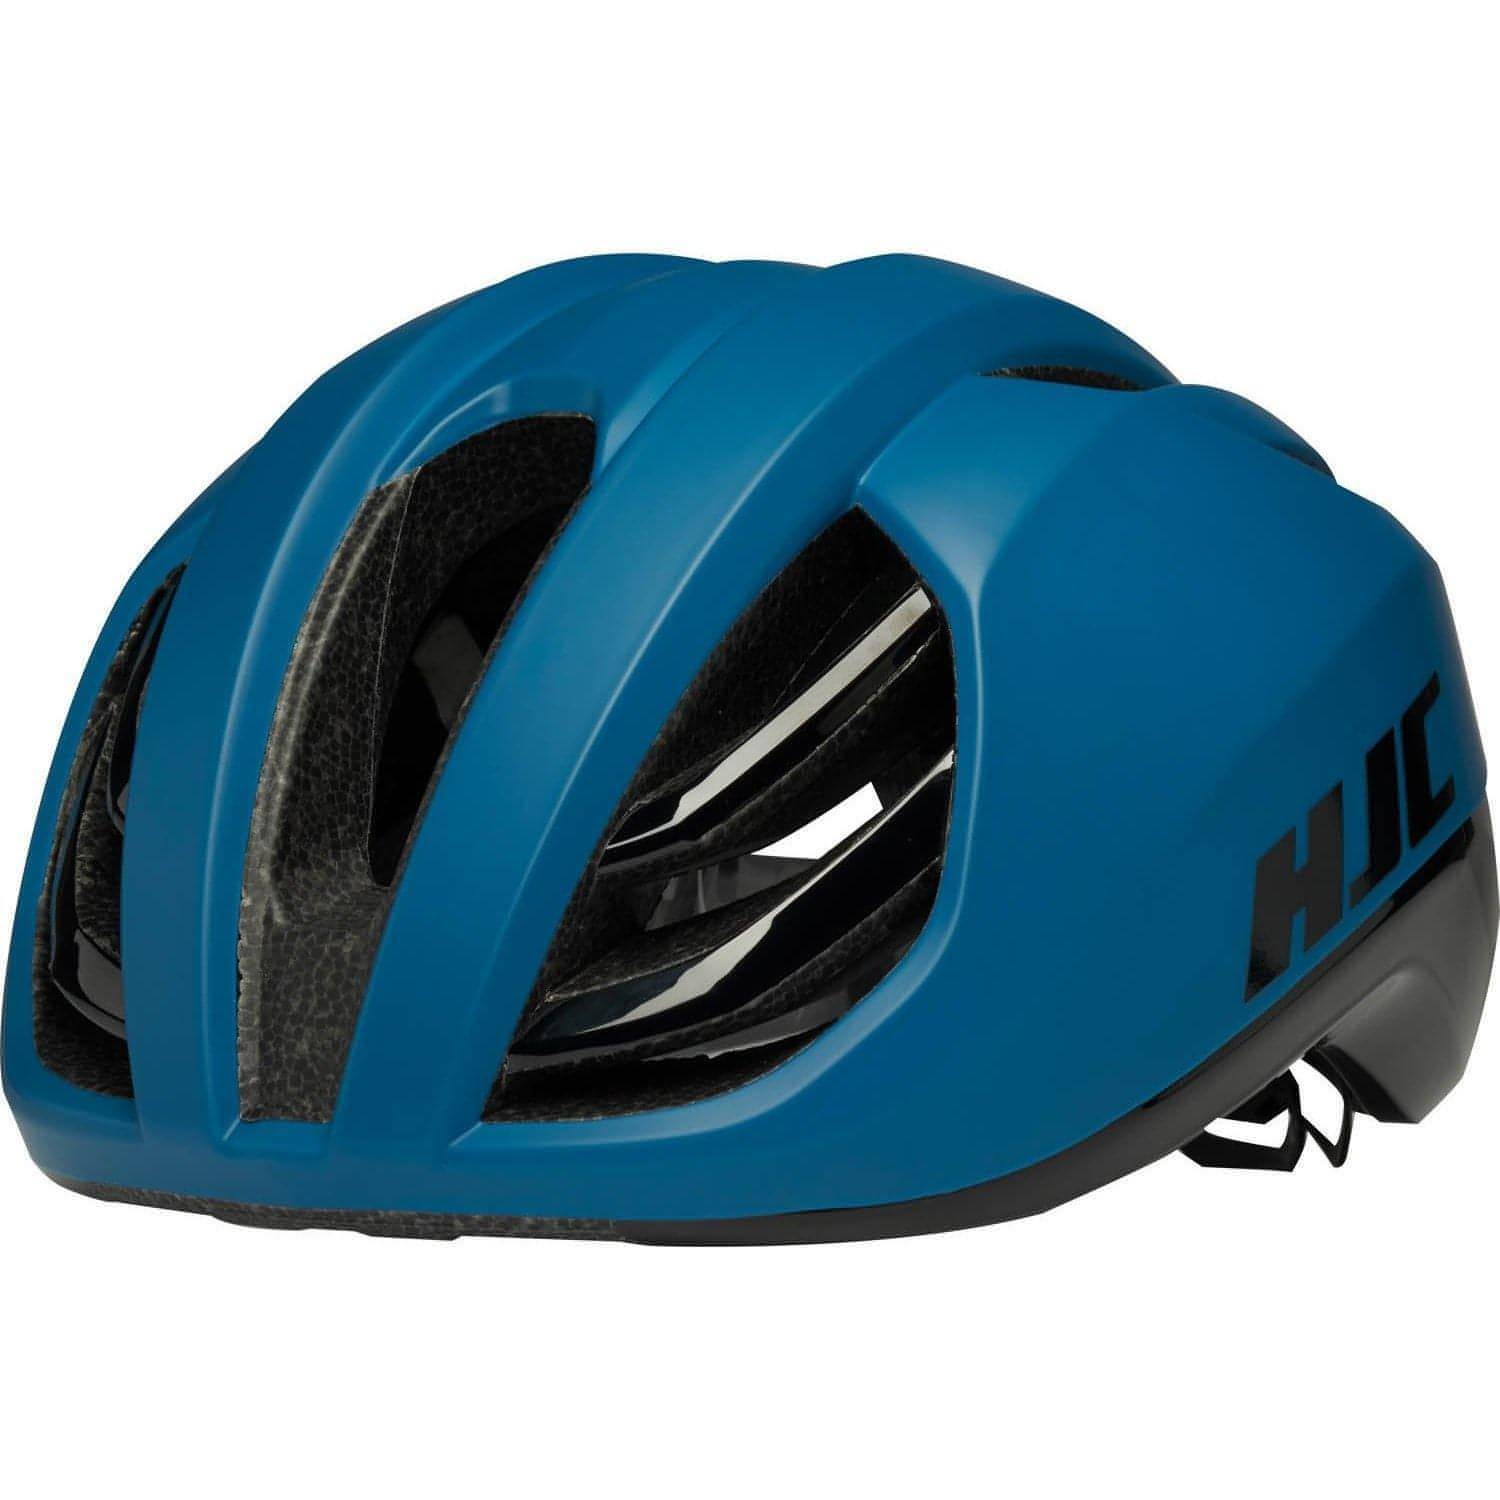 HJC Atara Road Cycling Helmet - Navy - Start Fitness